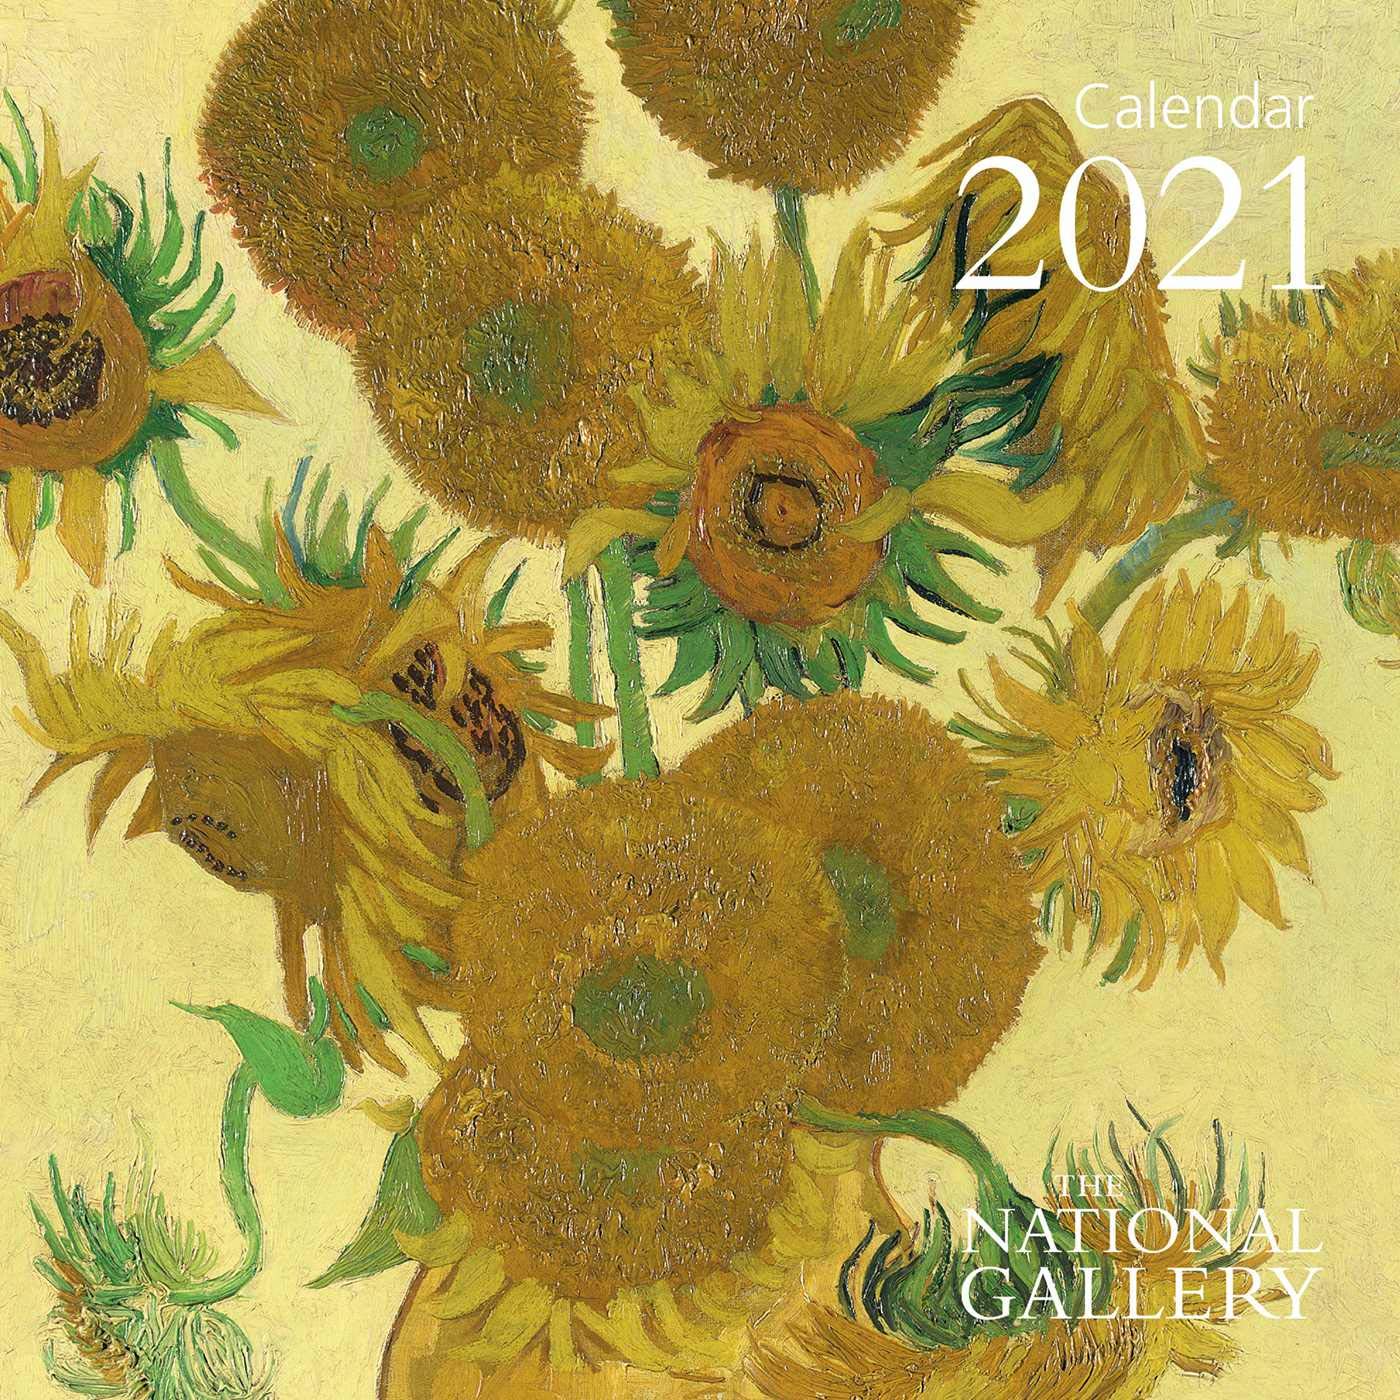 Calendar 2021 - Art - National Gallery - Impressionists | Flame Tree Studio